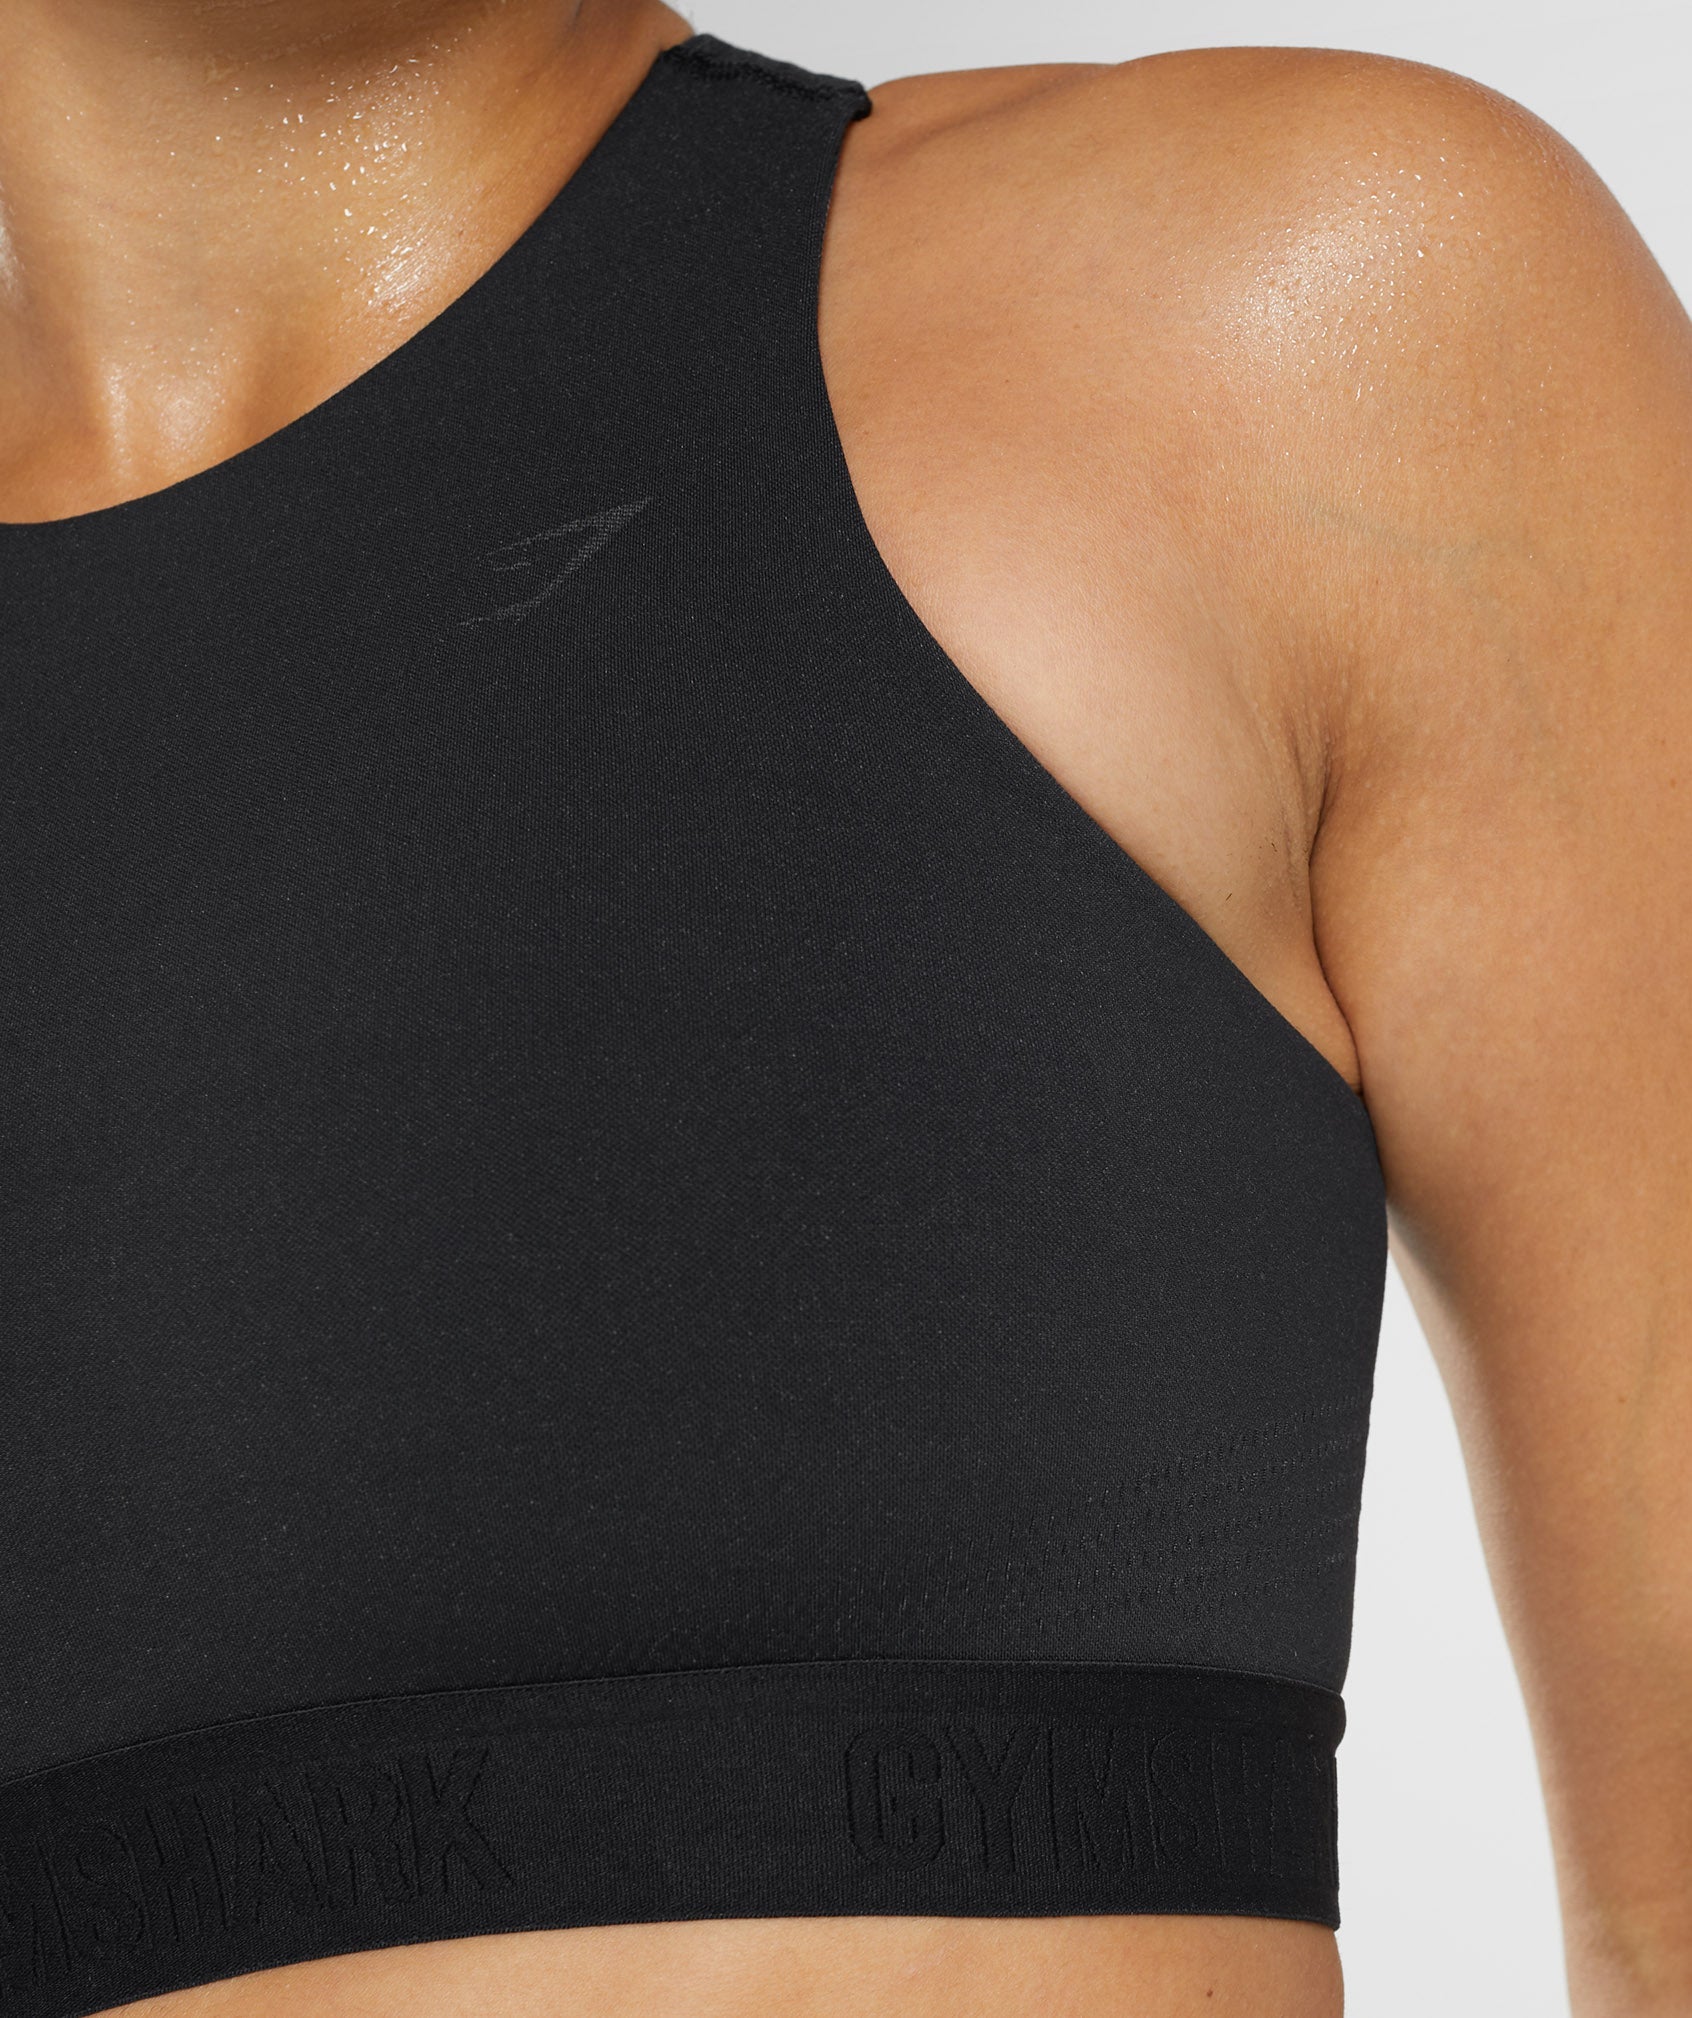 Nike Sports Bra Orange Size L - $30 (21% Off Retail) New With Tags